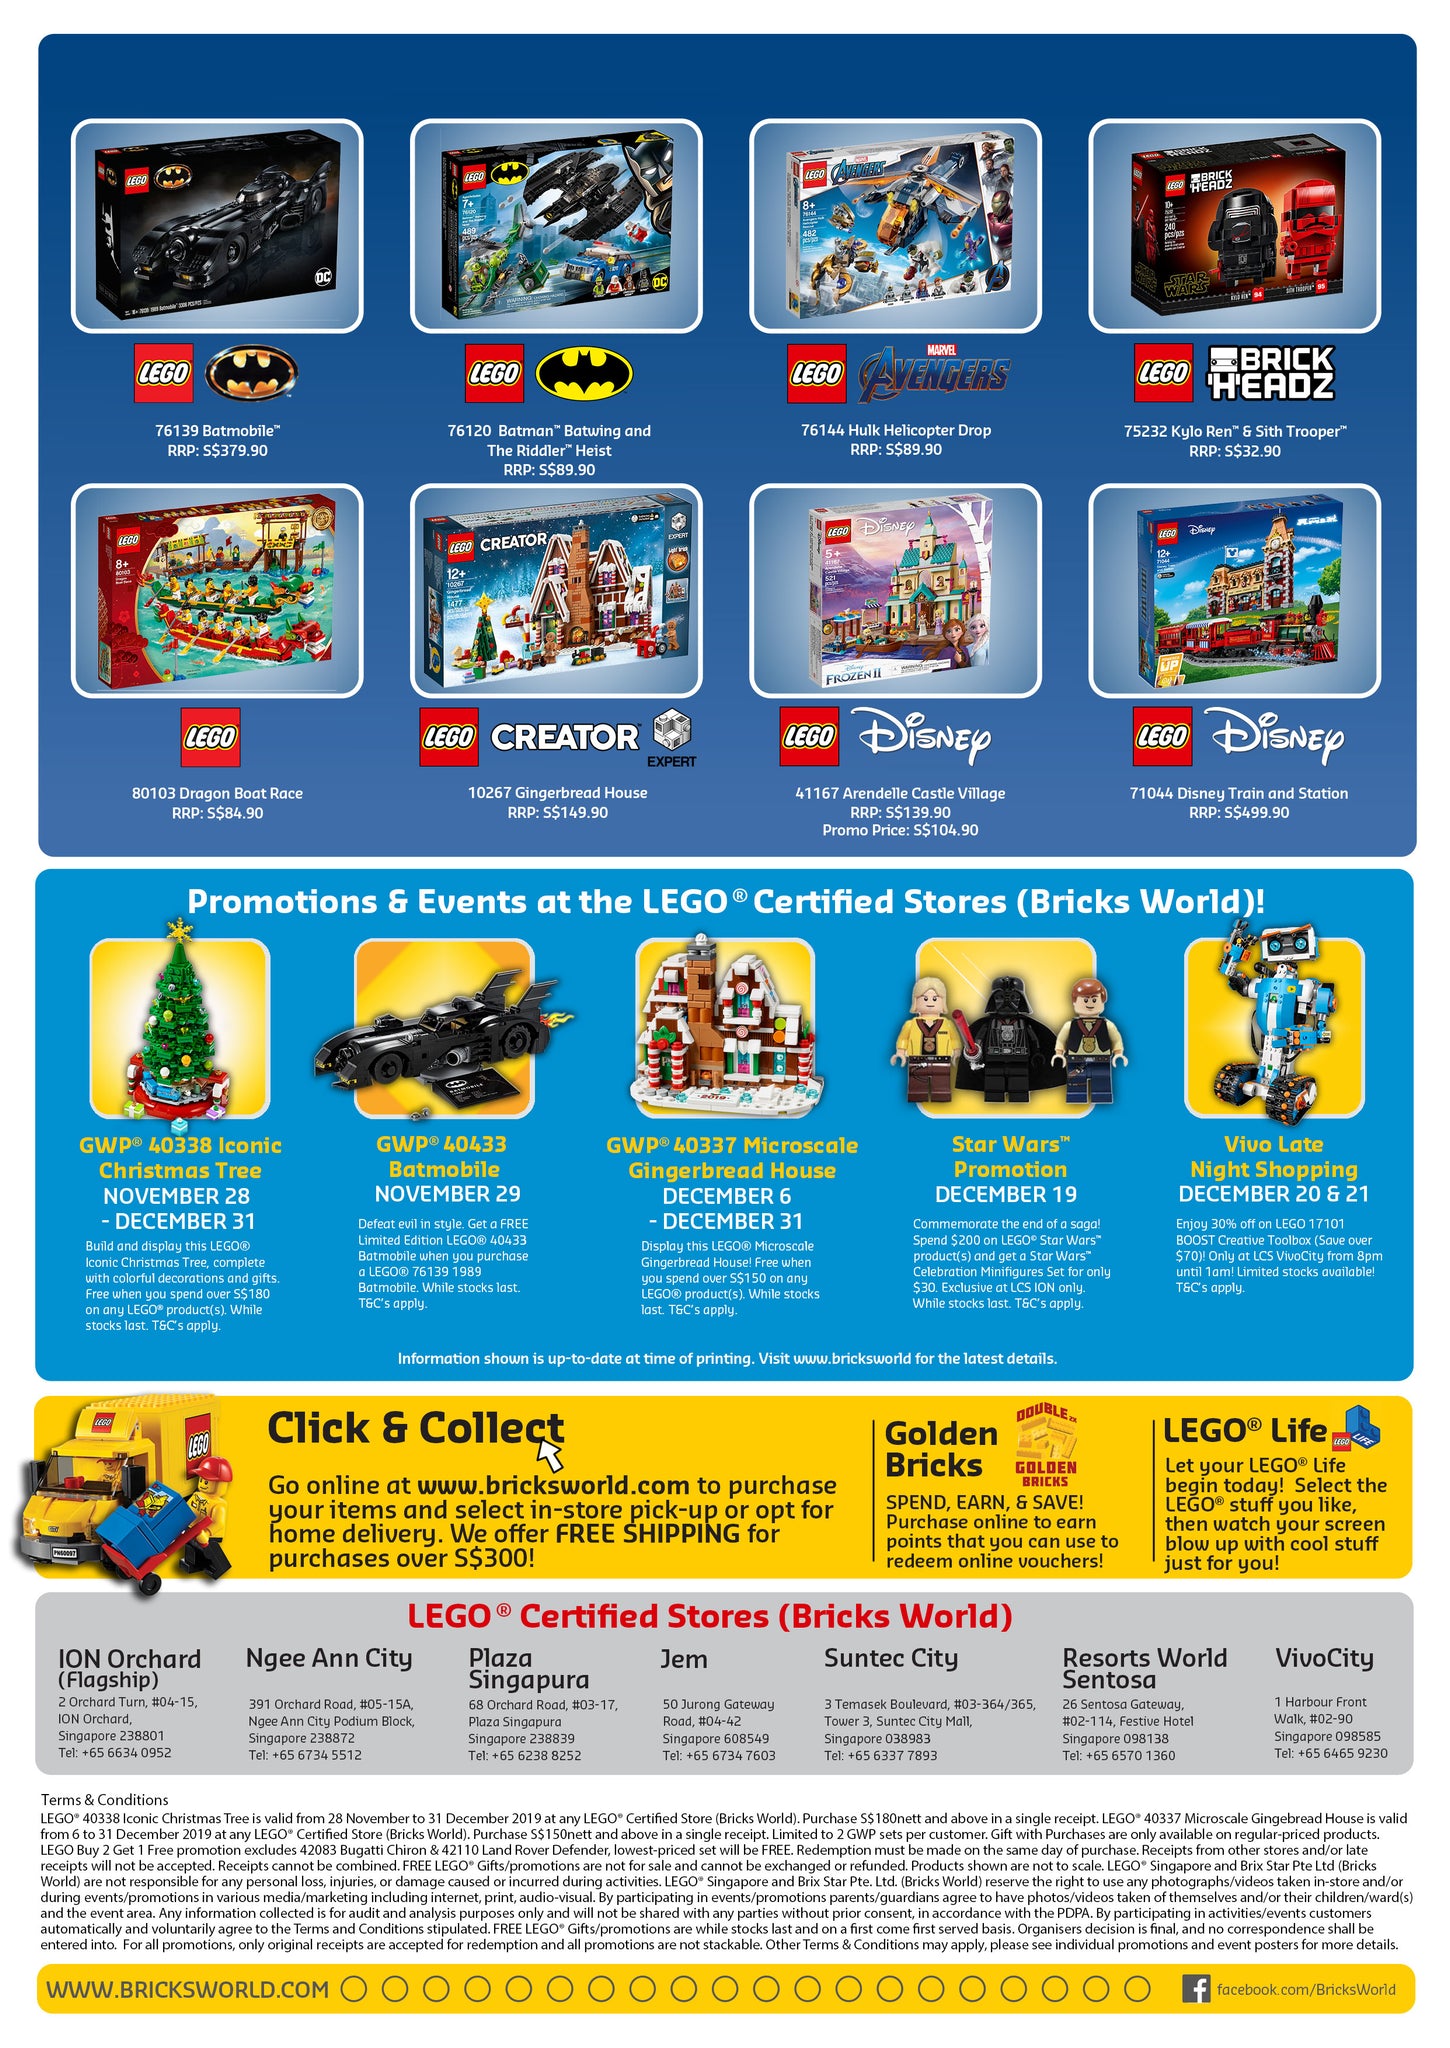 LEGO Certified Stores (Bricks World) 2019 Calendar